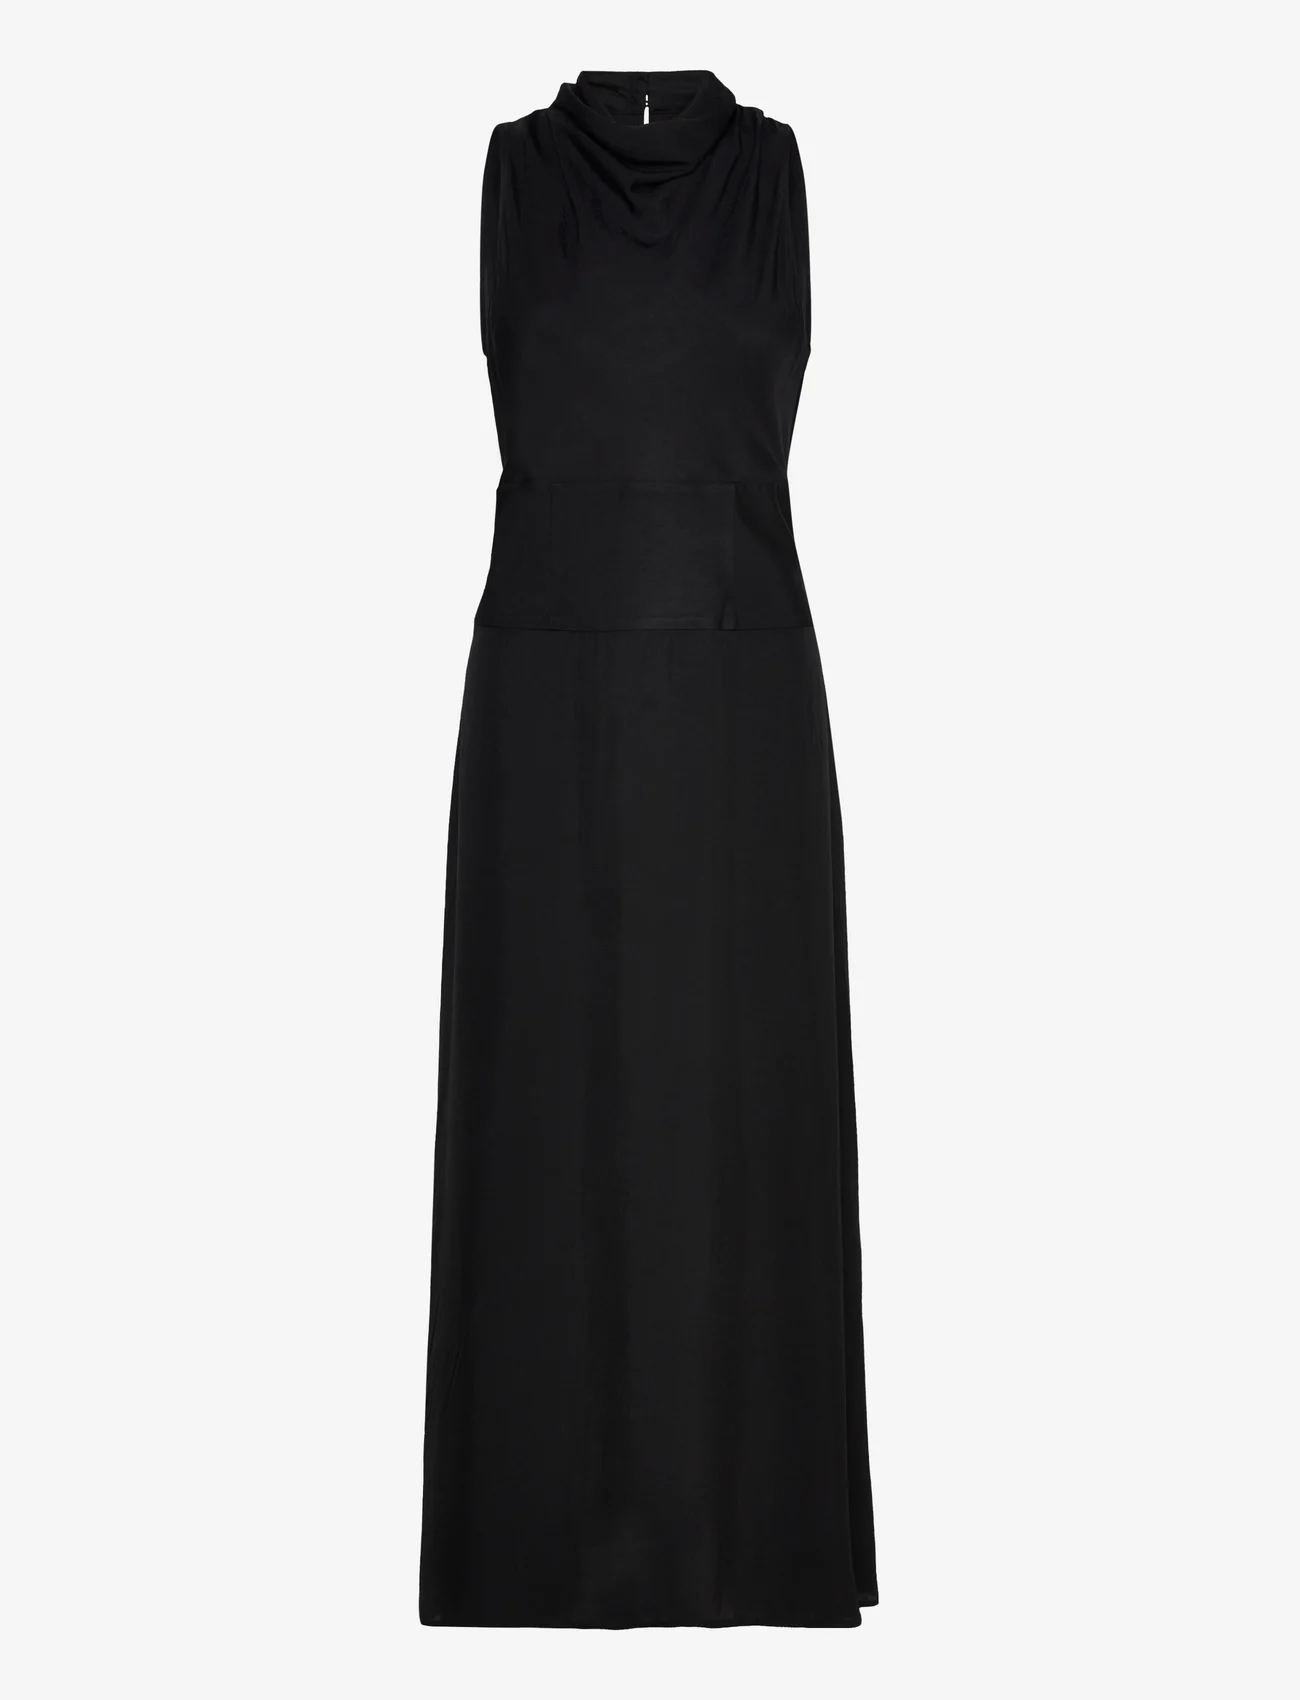 IVY OAK - Ankle length dress - midi dresses - black - 0